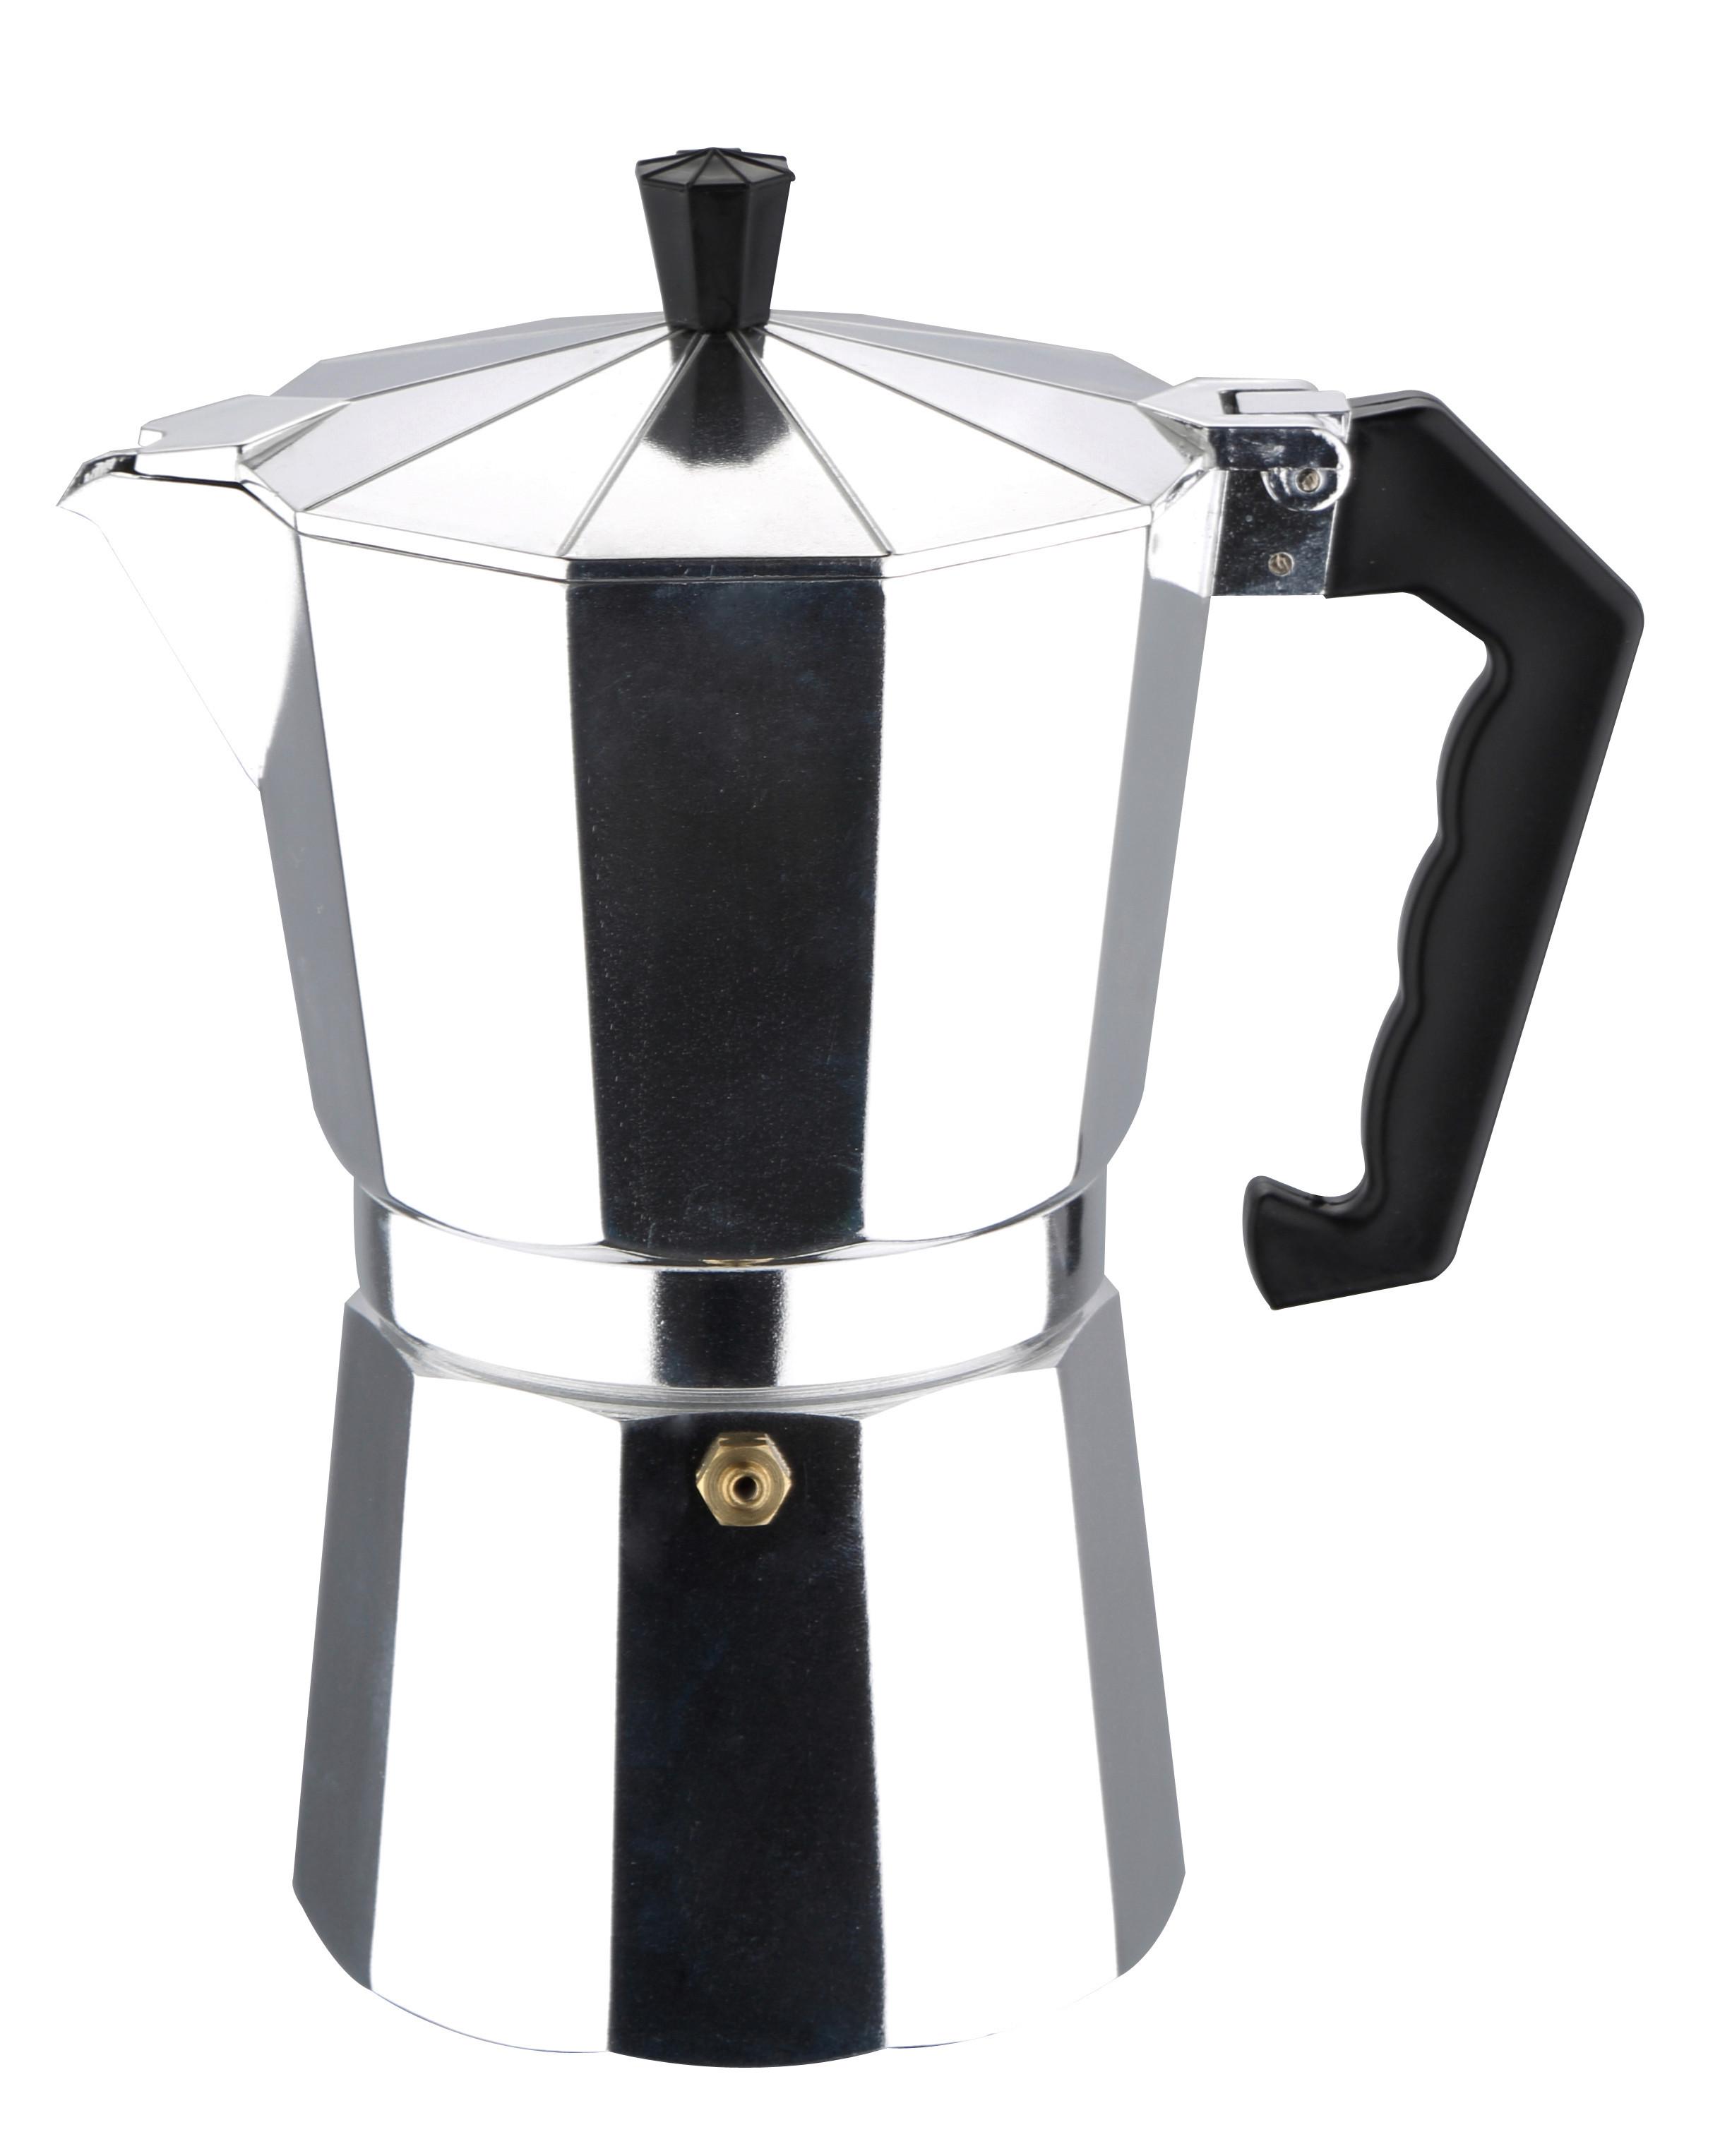 Espressokocher Bolonia ca. 240ml - Edelstahlfarben, MODERN, Kunststoff/Metall (0.24l)